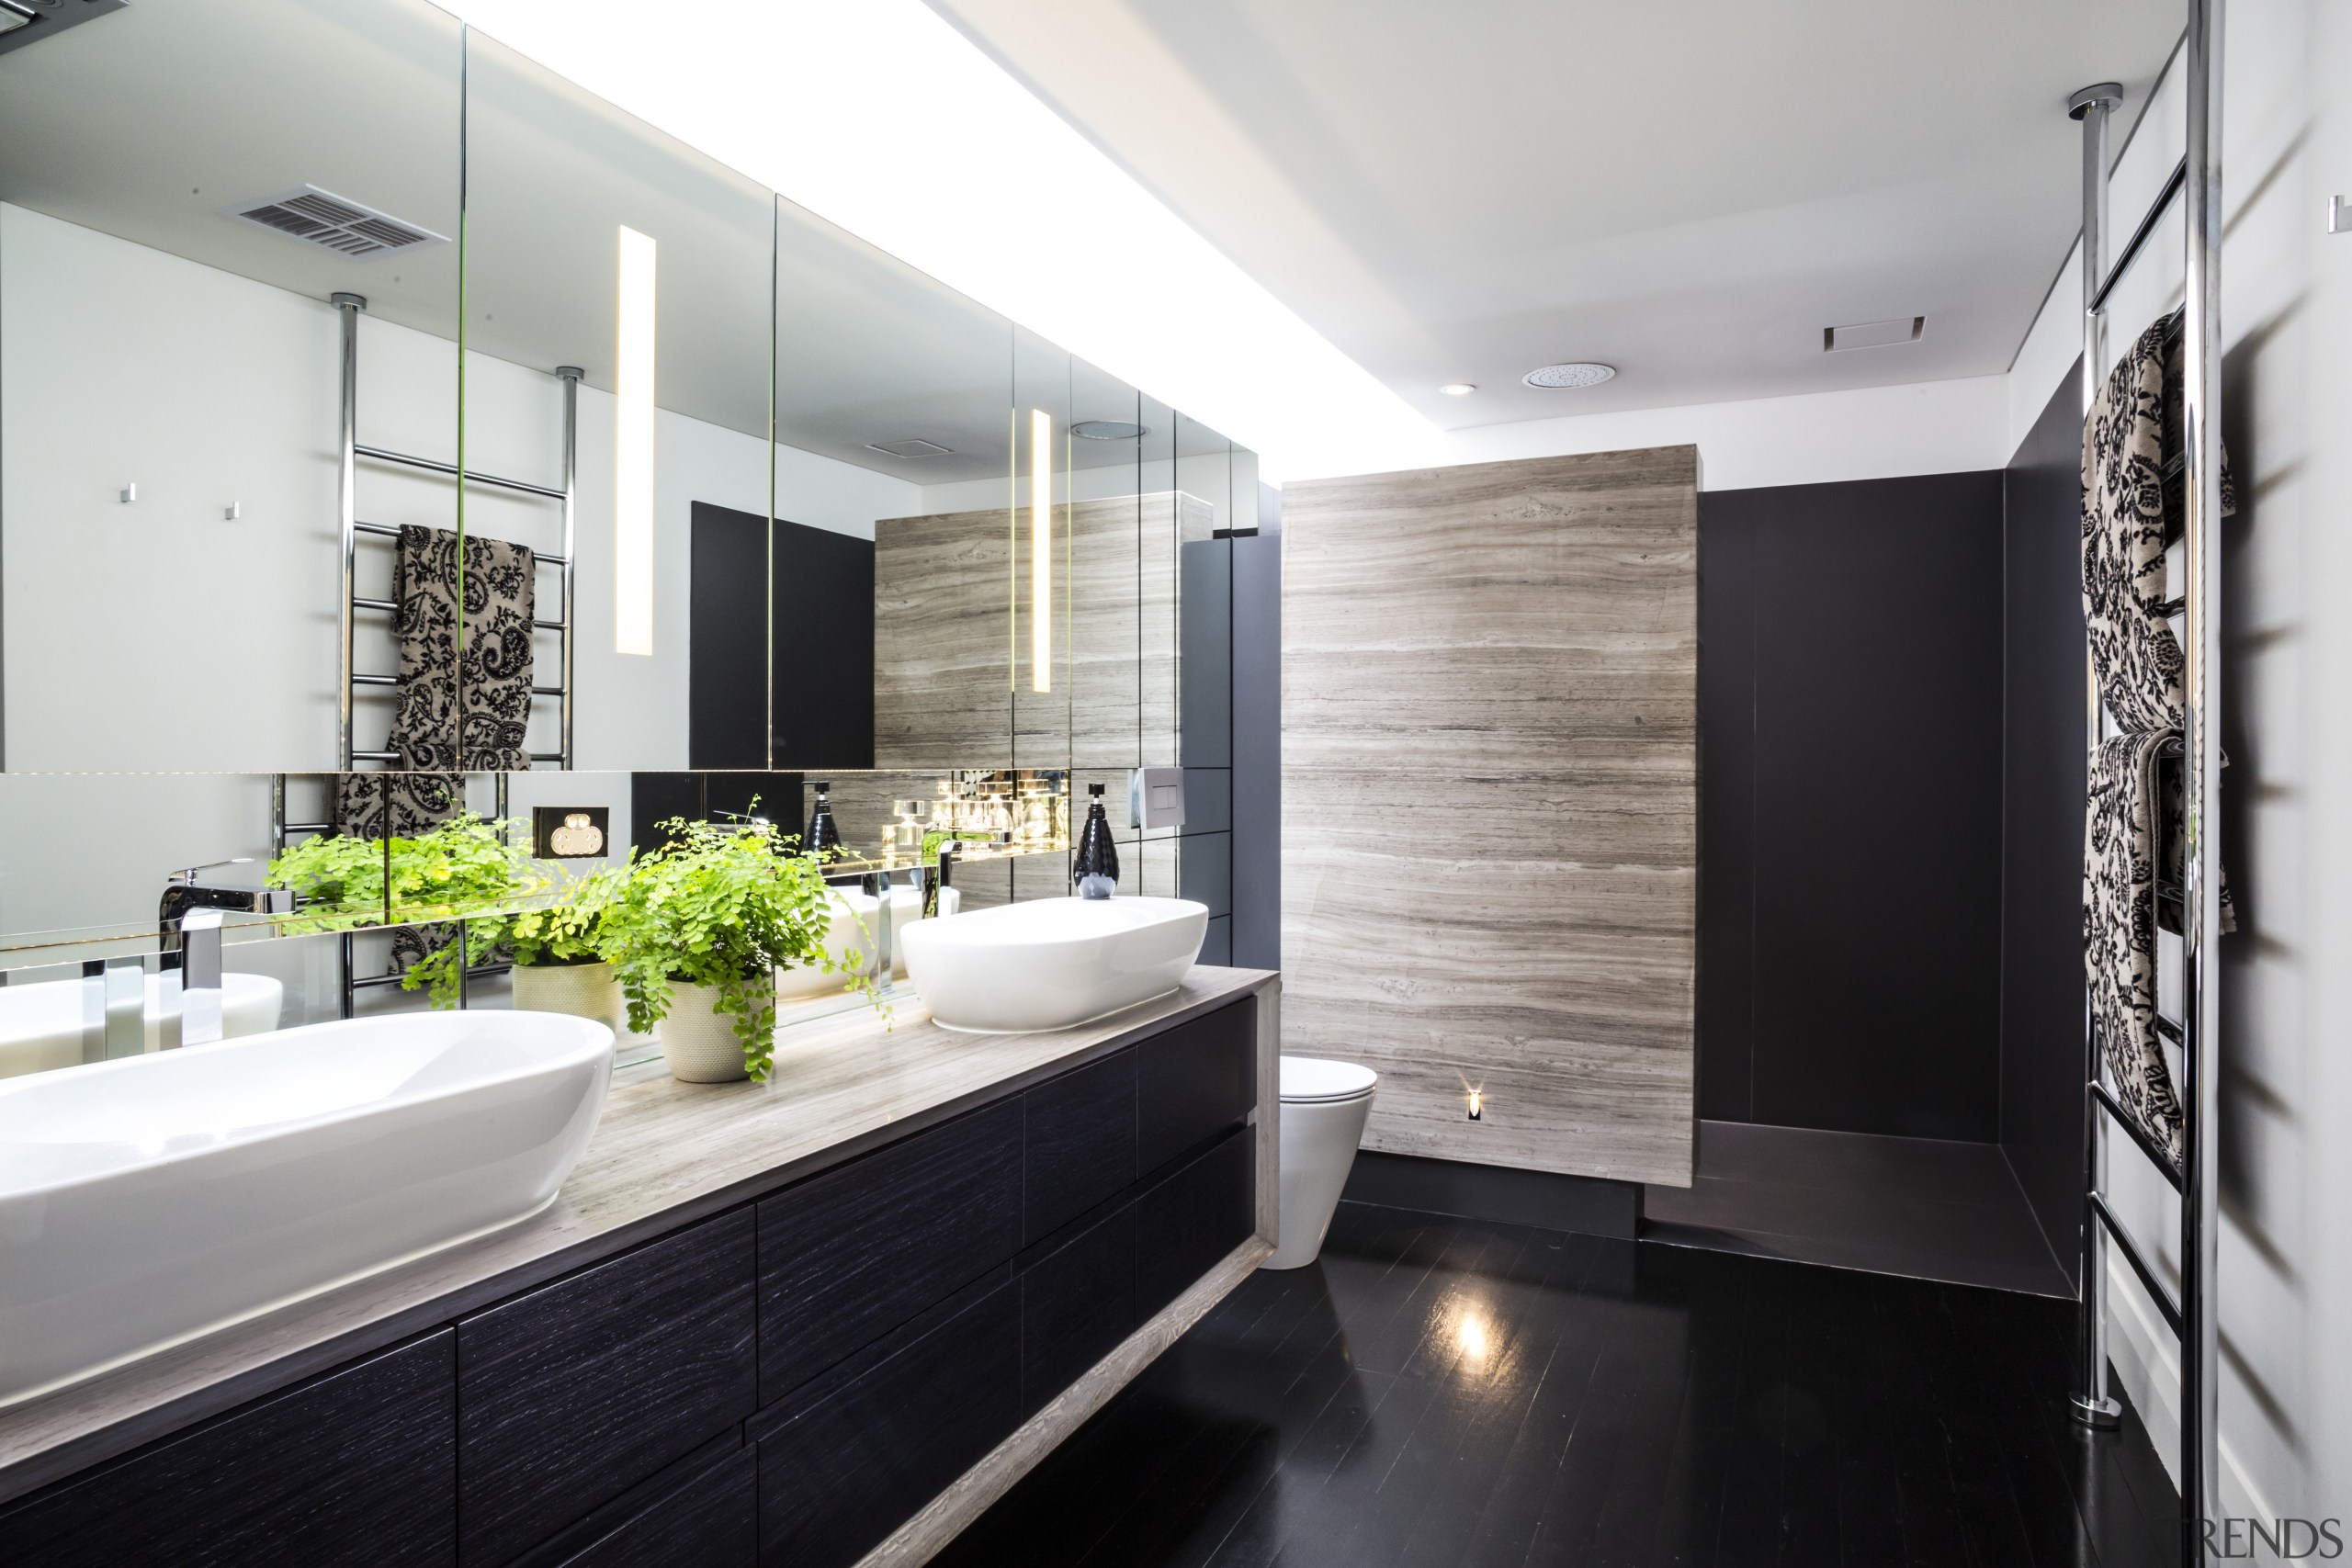 In this bathroom by designer Jason Saunders dark-veined architecture, bathroom, countertop, interior design, room, white, black